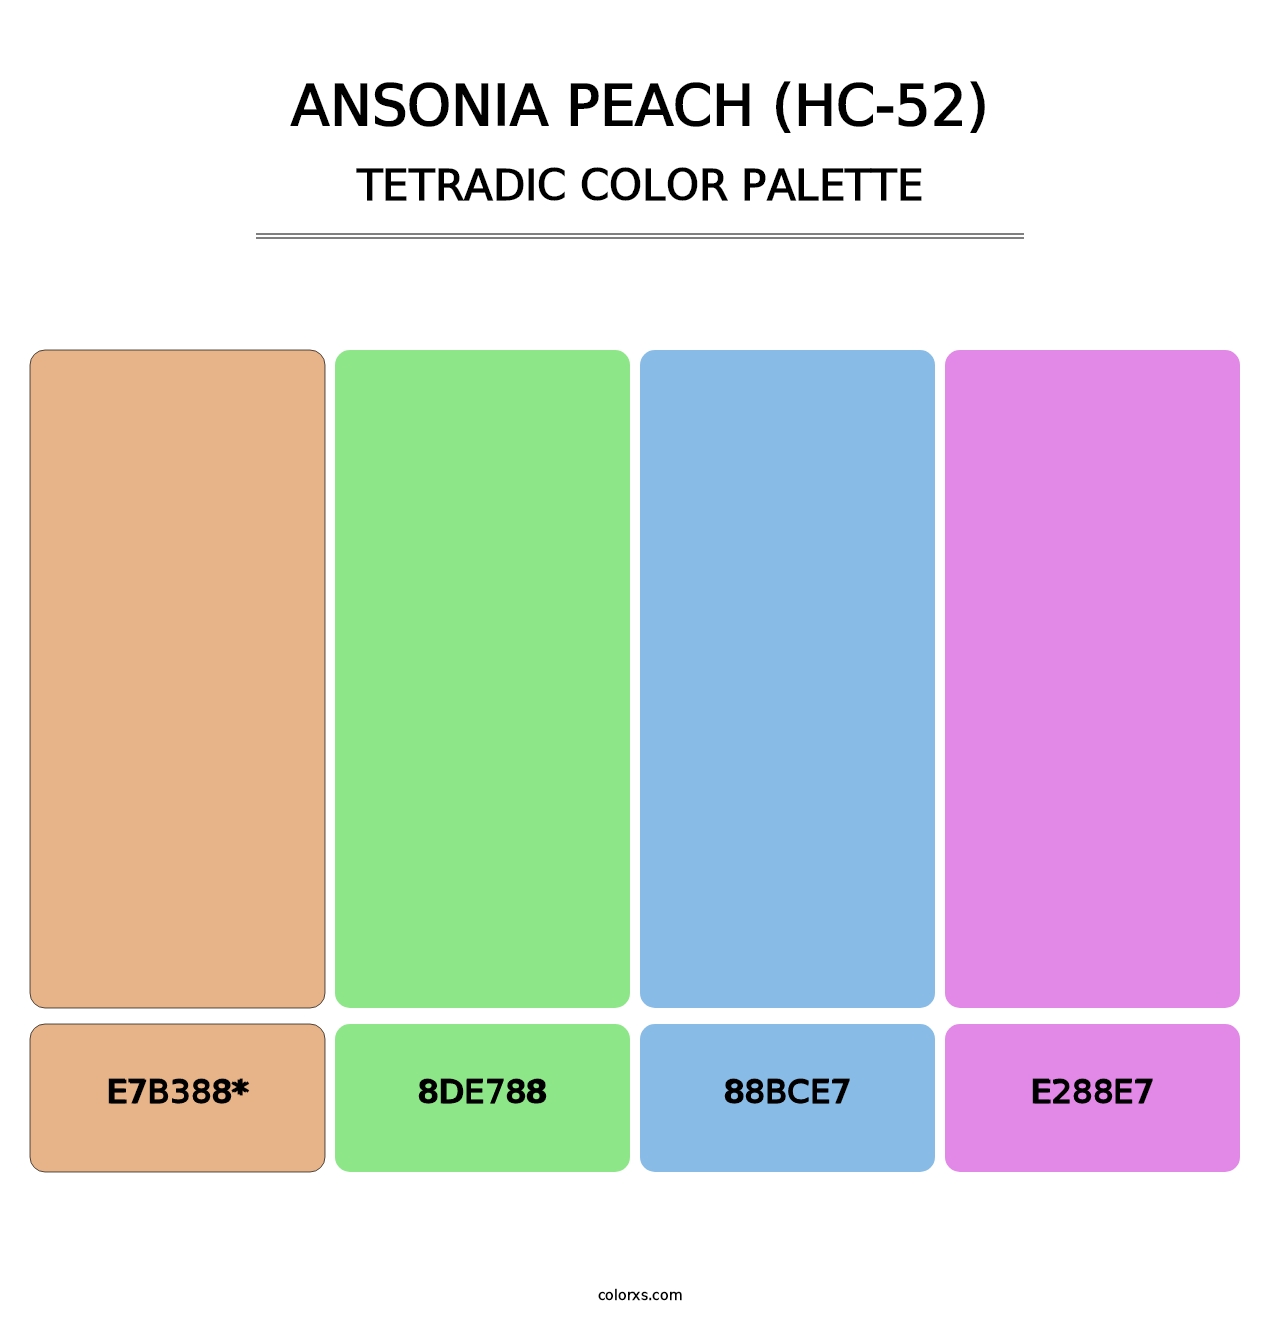 Ansonia Peach (HC-52) - Tetradic Color Palette